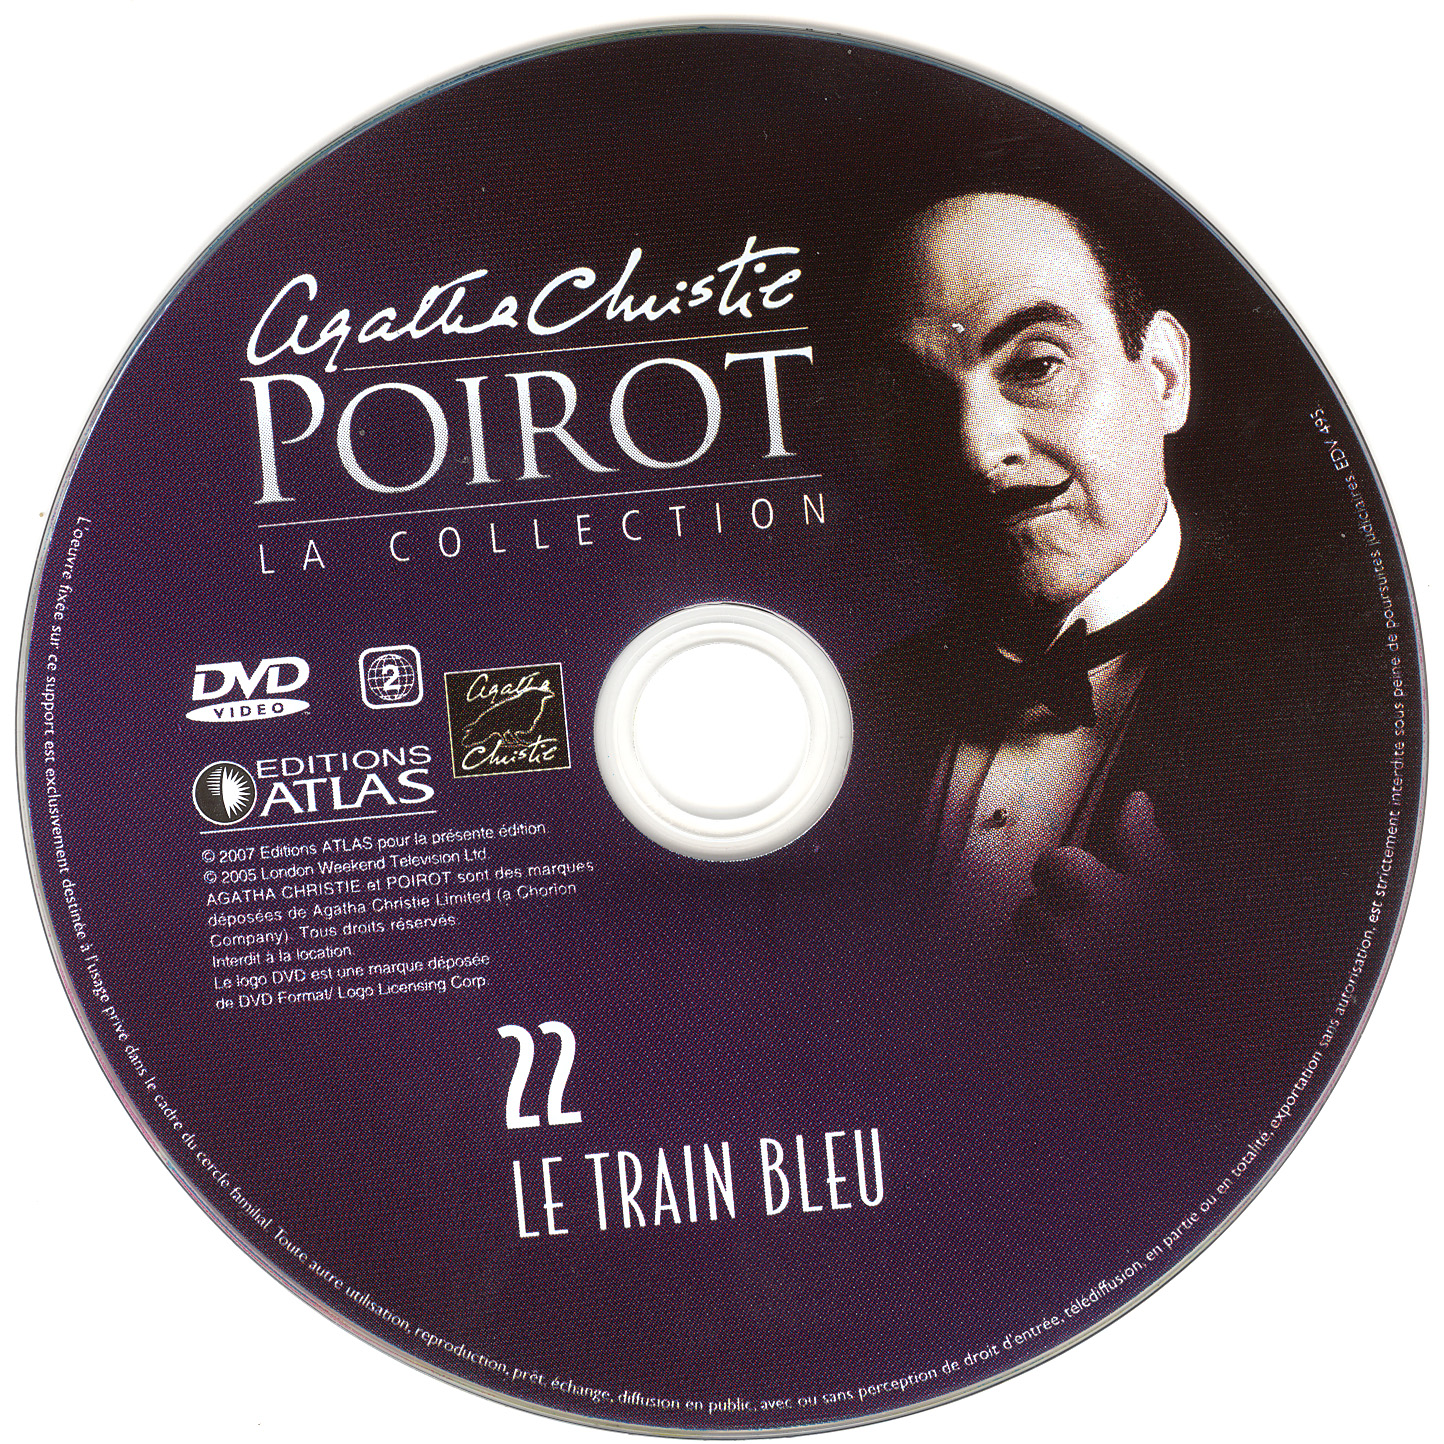 Hercule Poirot vol 22